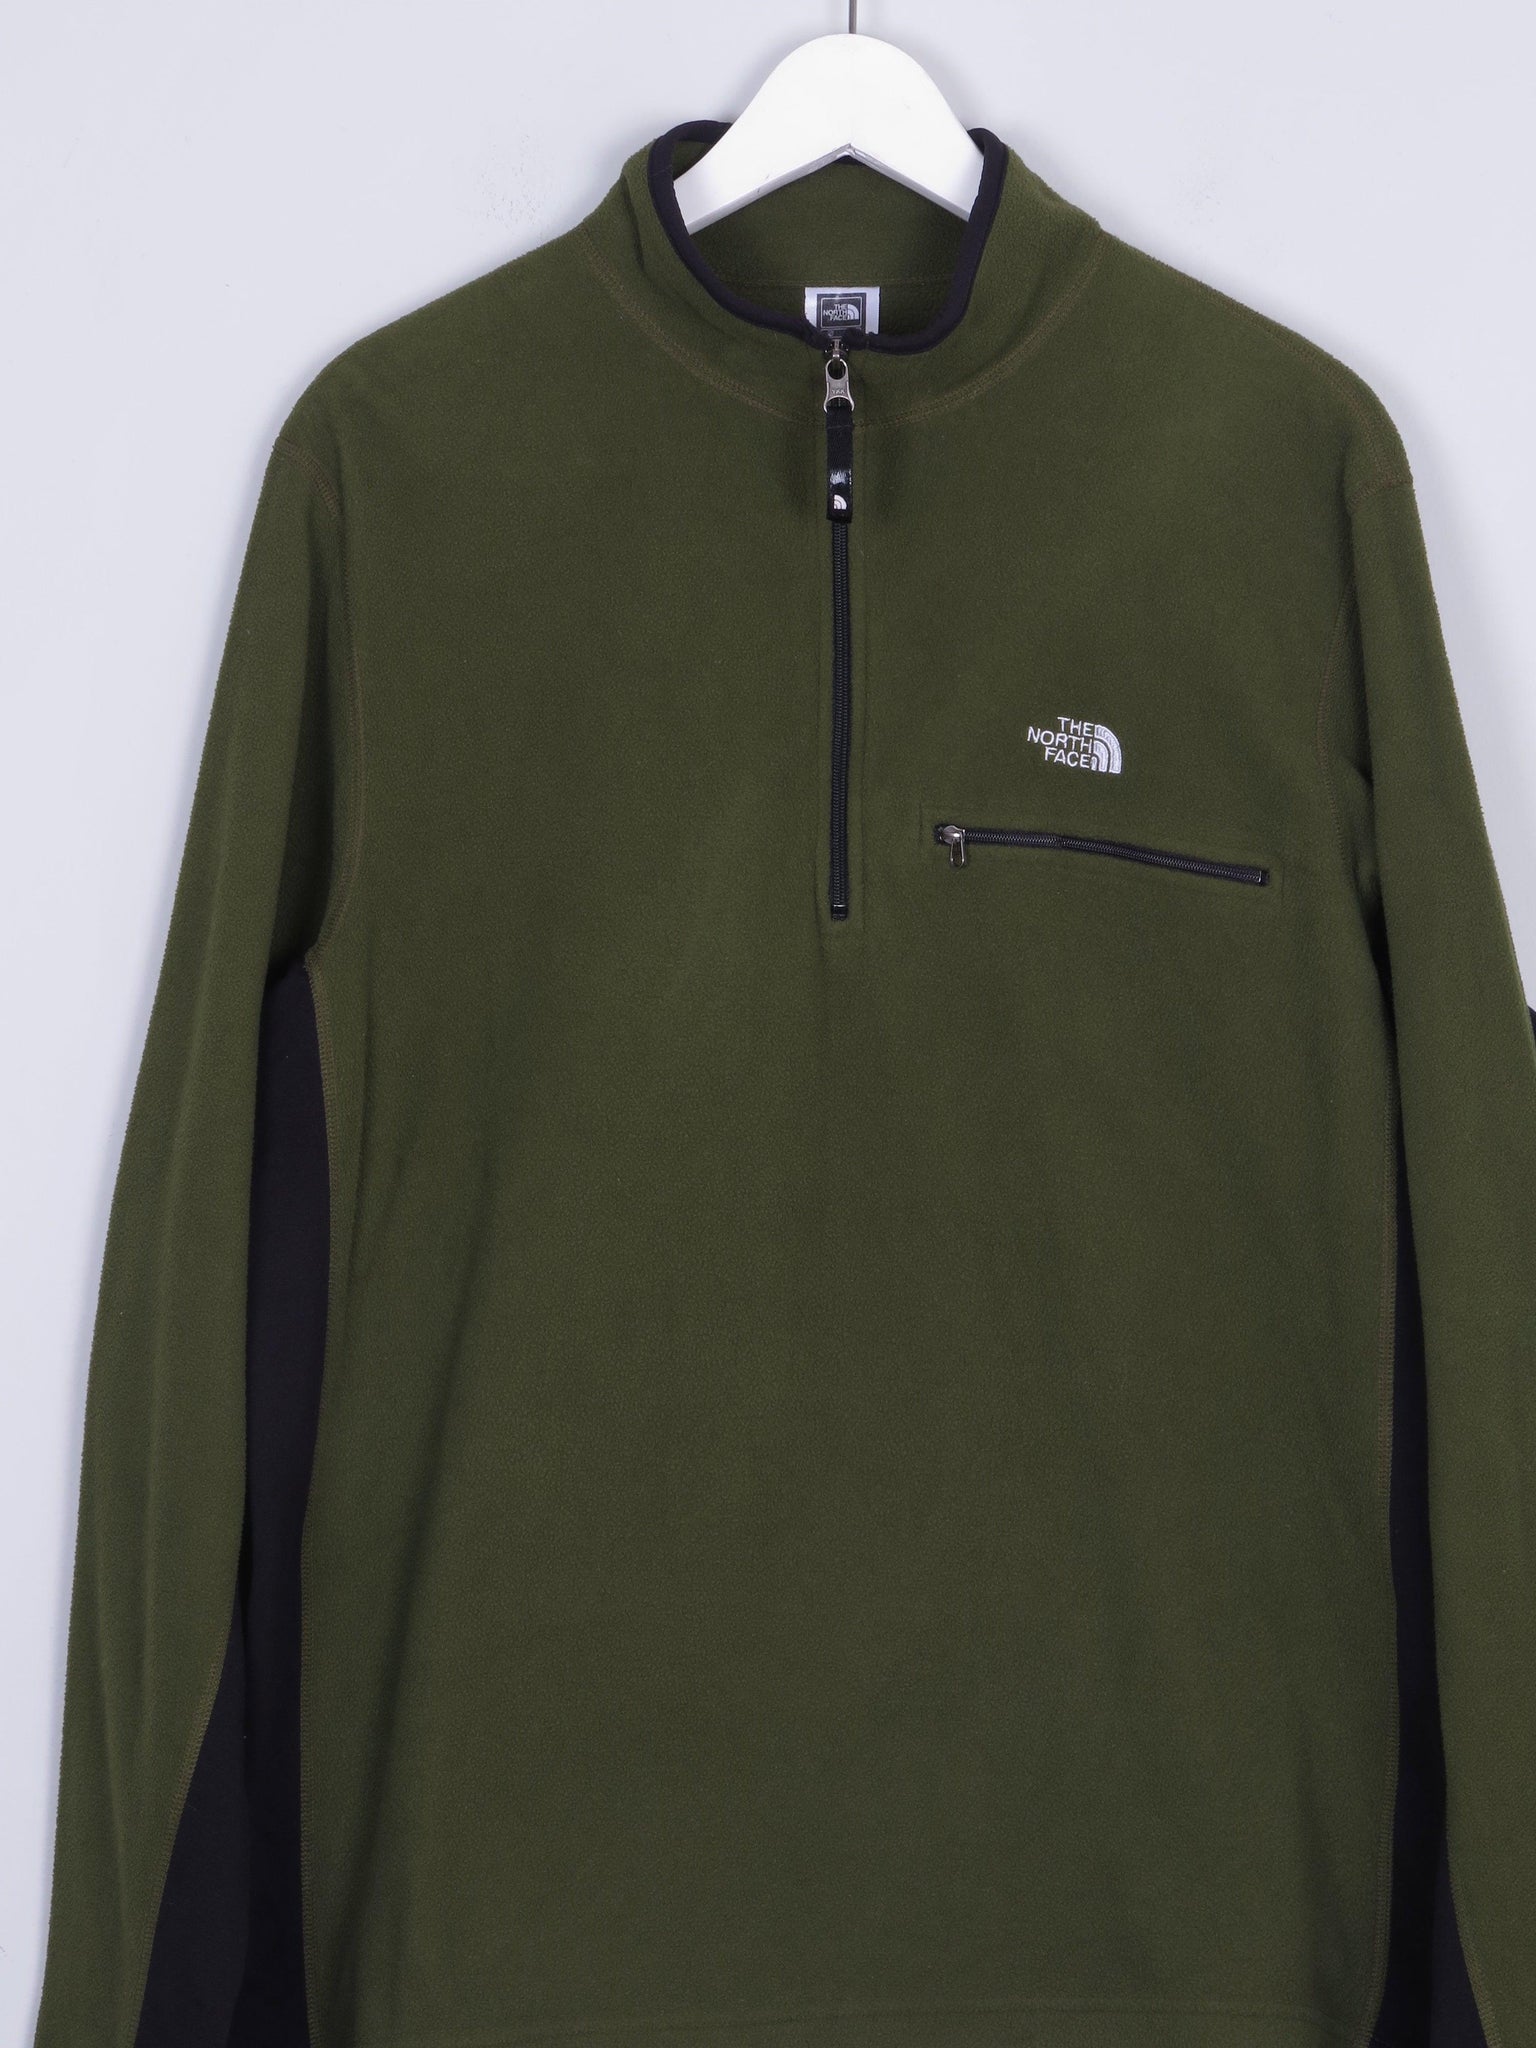 Men's Khaki Green The North Face 1/4 Zip Top XL - The Harlequin